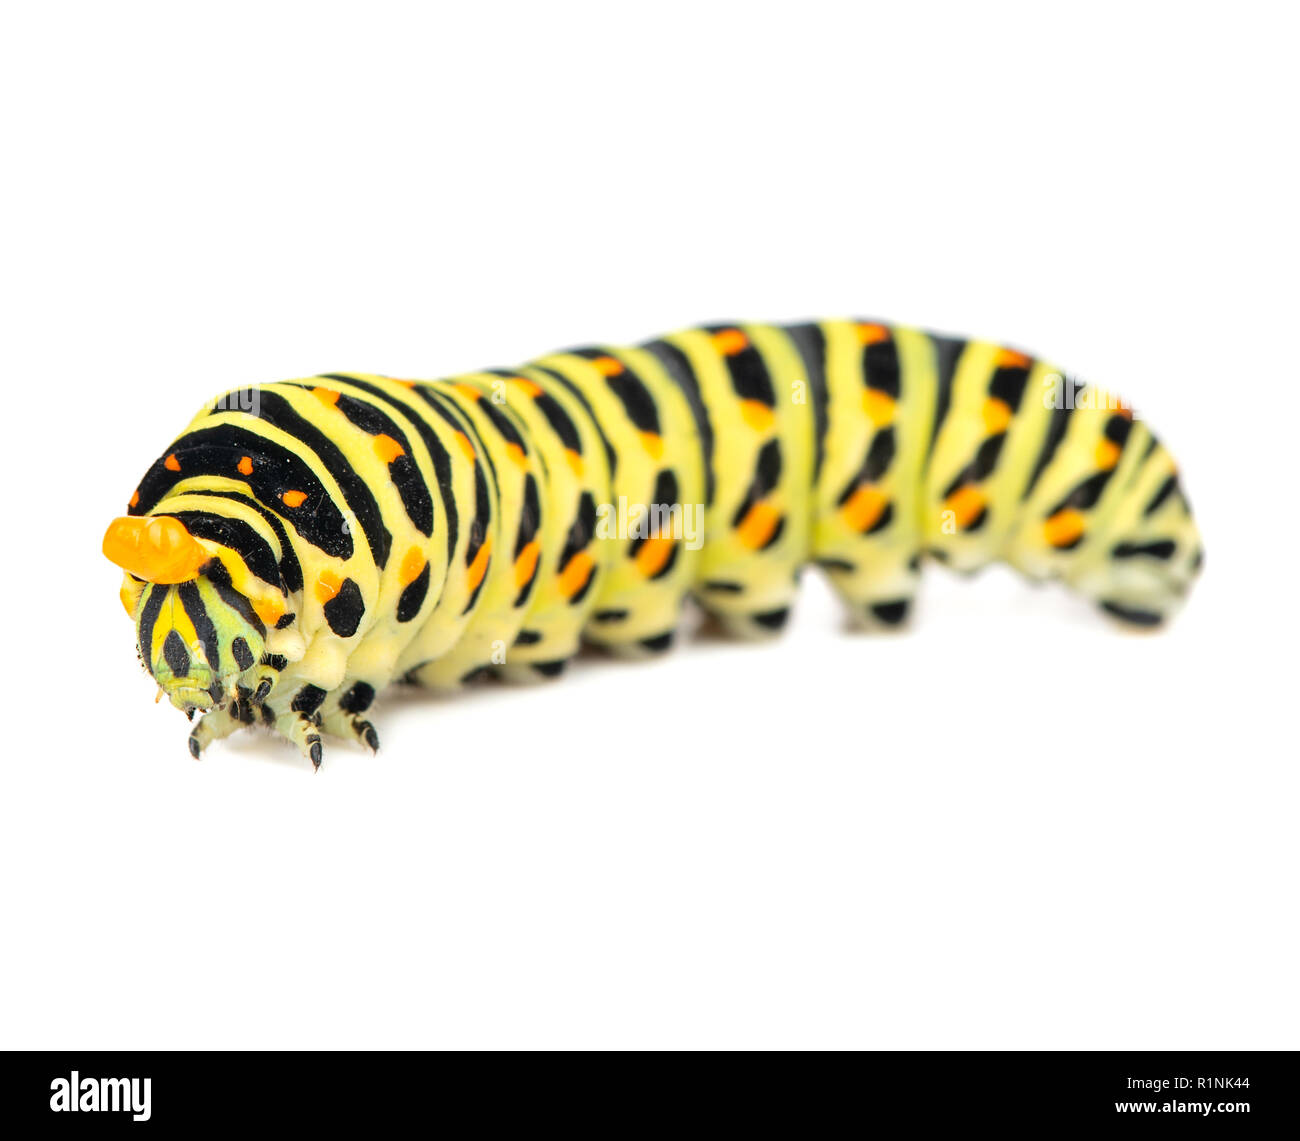 Yellow black swallowtail caterpillar isolated on white background Stock Photo